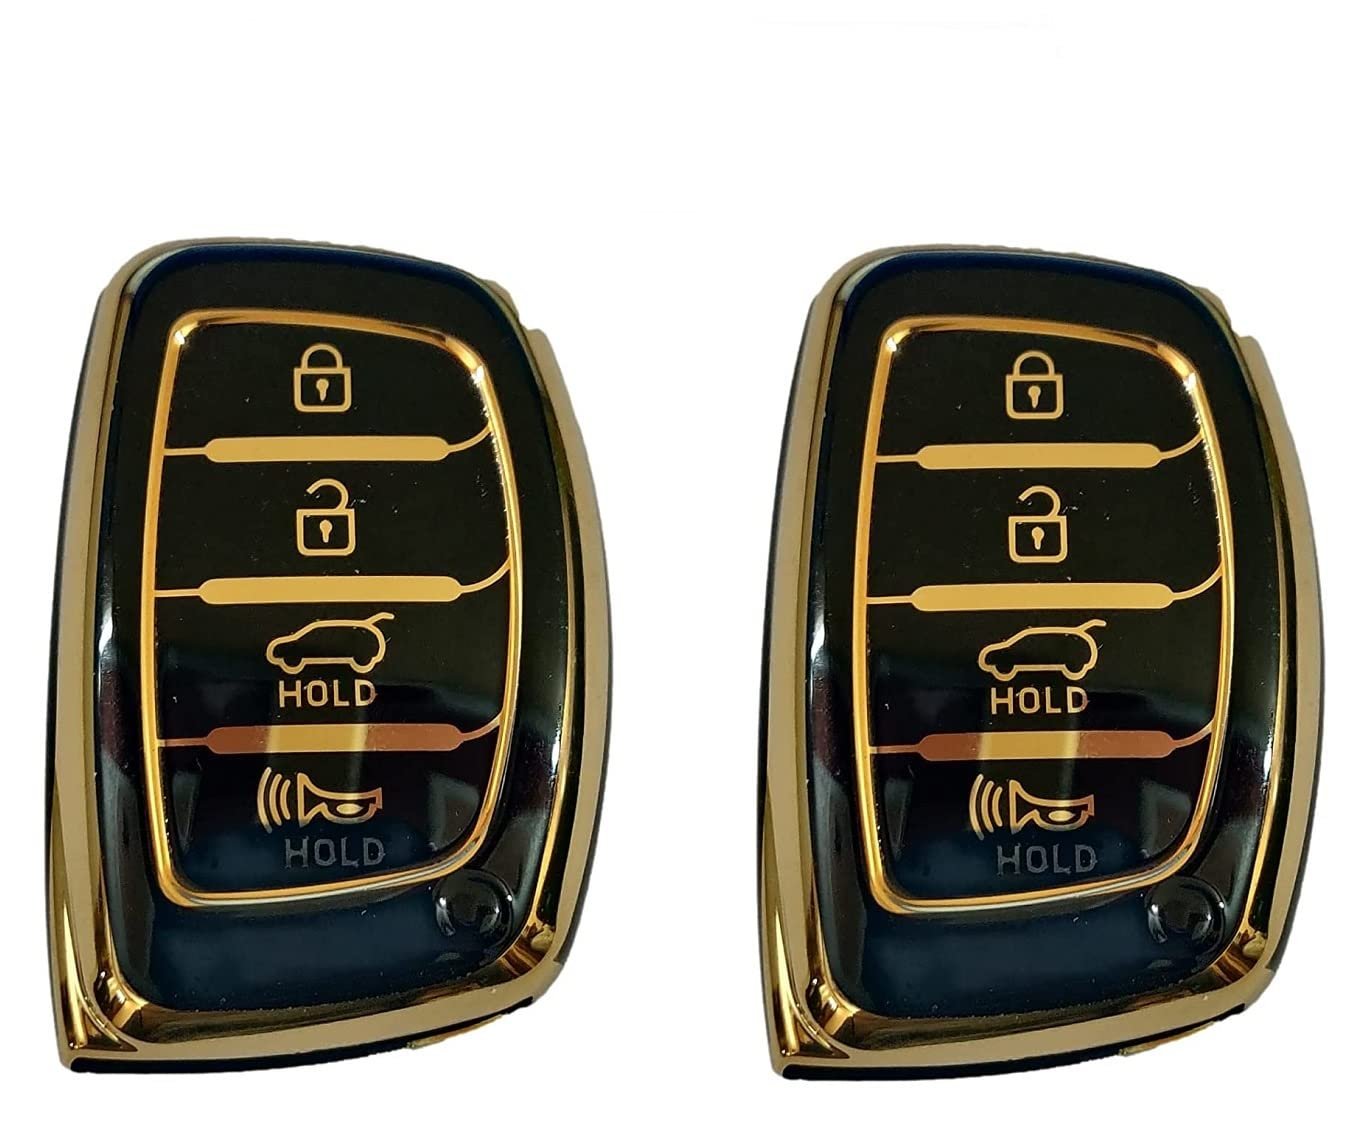 TPU Car Key Cover Compatible with Creta, Alcazar, i20, Venue, i10 Nios, Xcent 4 ButtonSmart Keys (Pack of 2) Black Image 